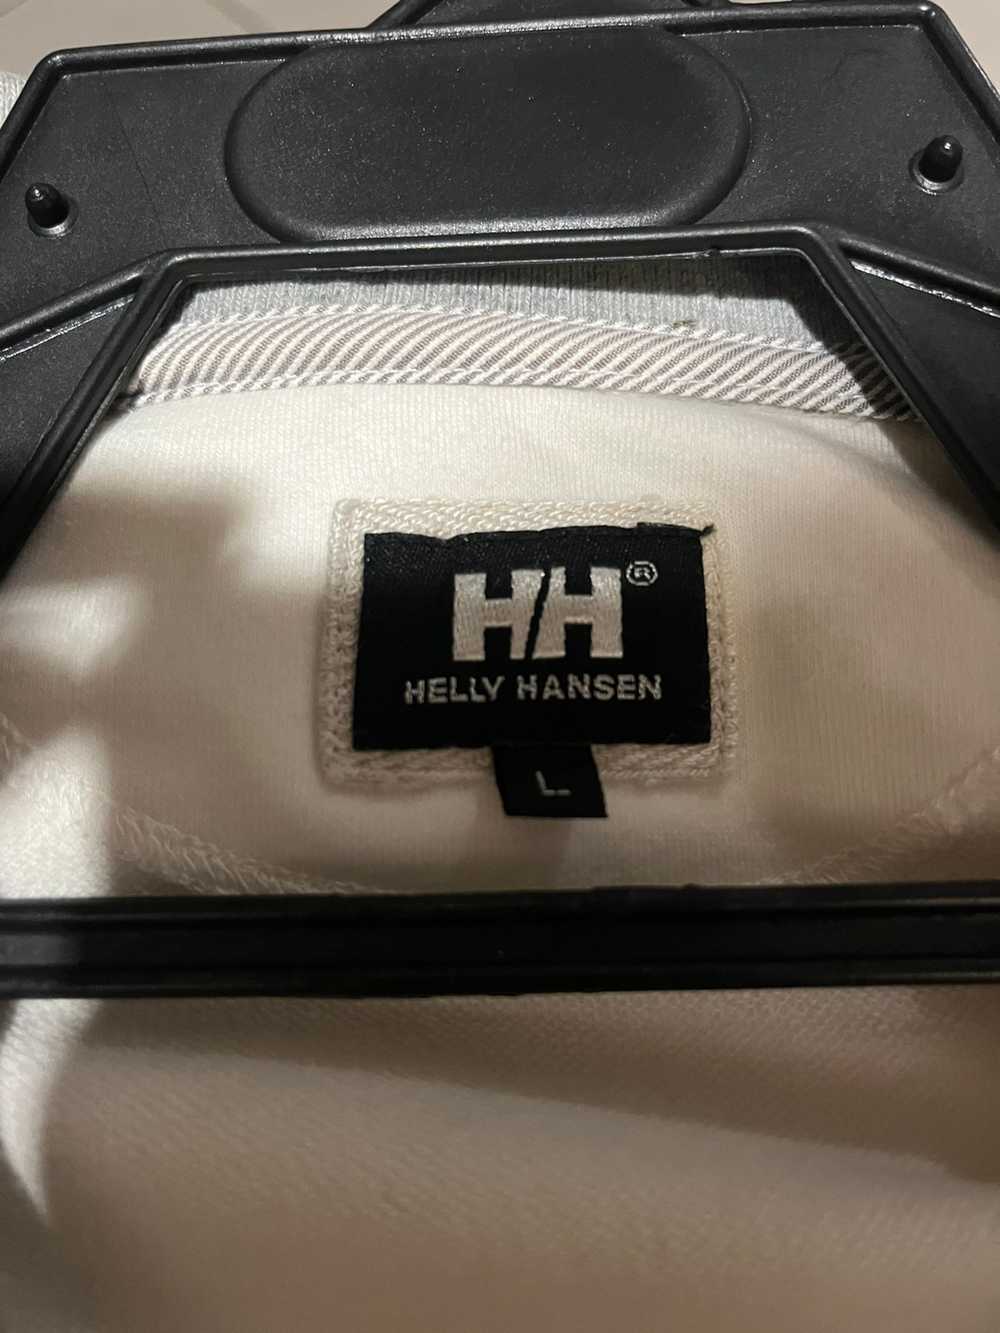 Helly Hansen - Helly hanson jacket - image 6